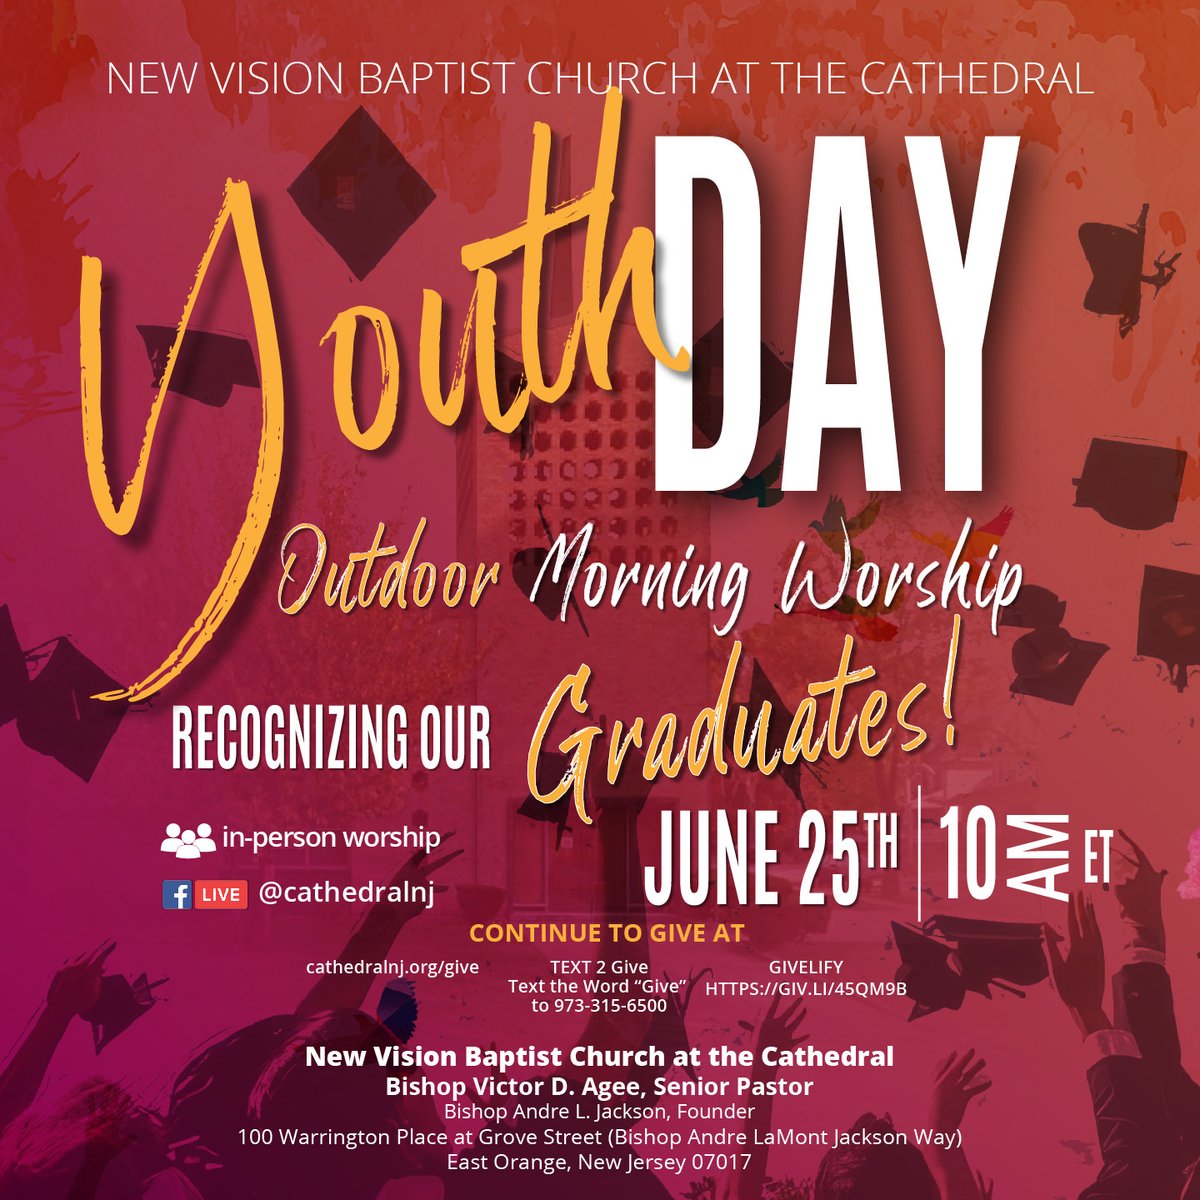 #NewVisionNation #NewVision #Graduates #YouthDay #OutDoorWorship #BishopAgee #Graduation #EastOrange